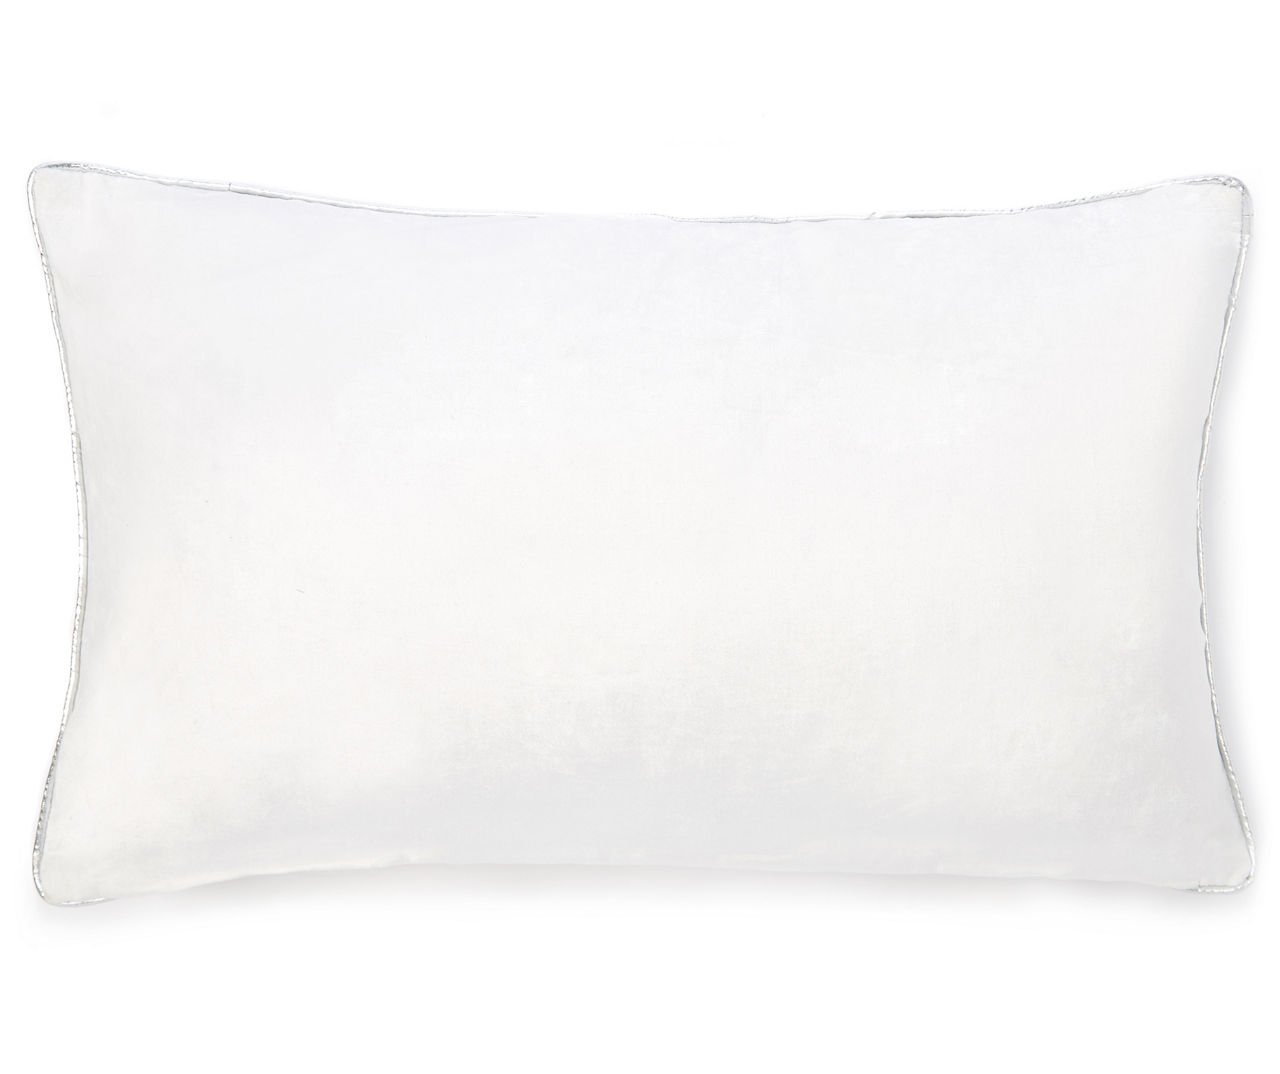 Beaded Snowflake Velvet Lumbar Throw Pillow